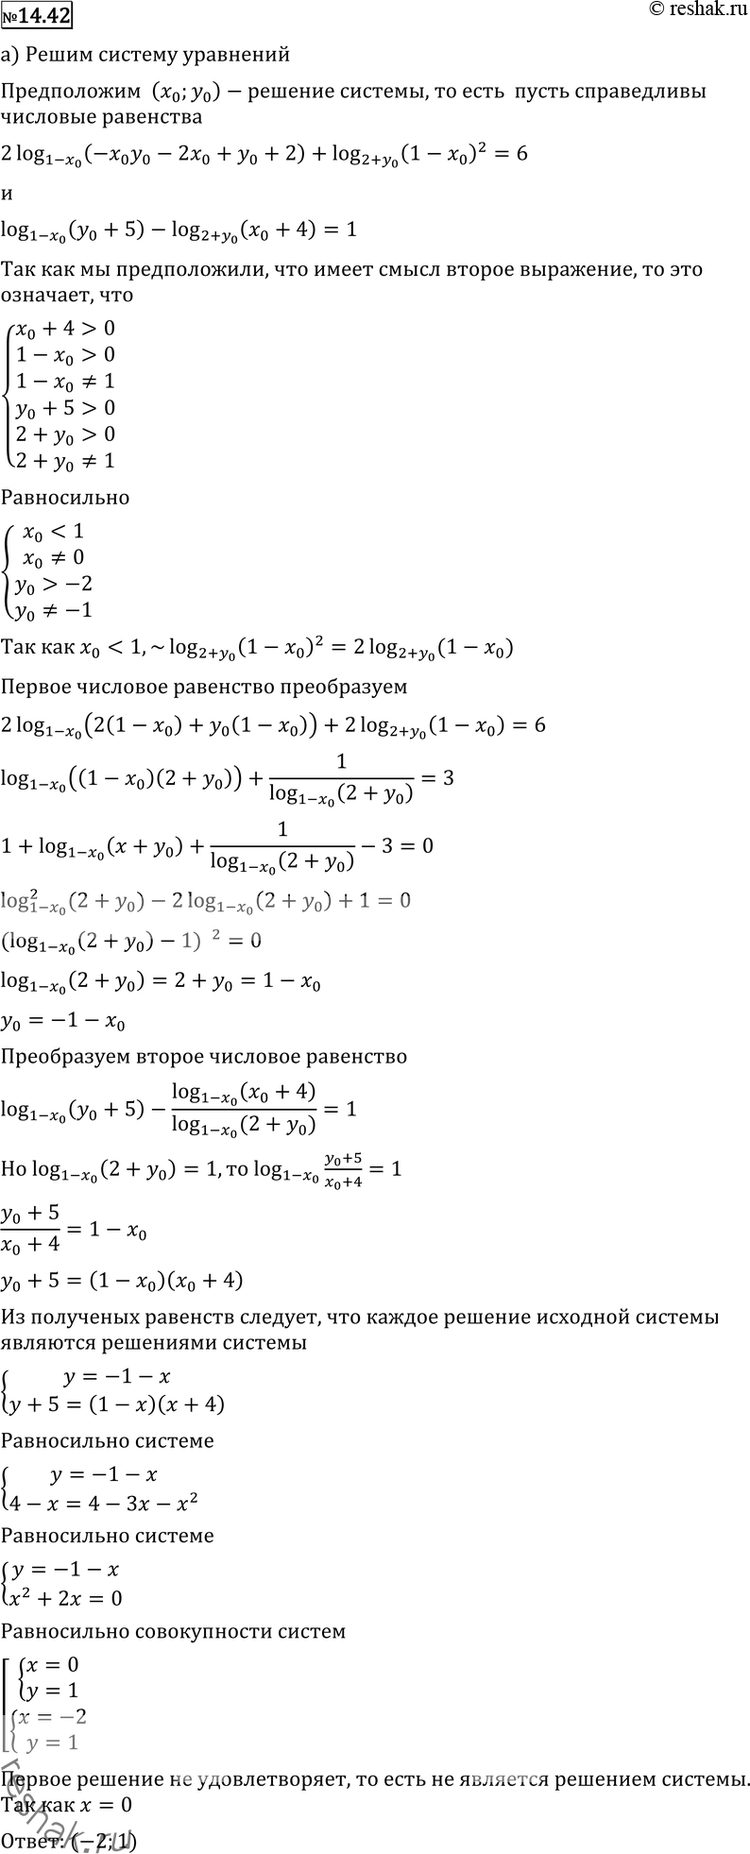  14.42 ) 2log1-x(-xy-2x+y+2) + log2+y(x2-2x+1)=6log1-x(y+5) - log2+y(x+4)=1; ) log1+x(y2-2y+1) + log1-y(x2+2x+1)=4log1+x(2y+1) - log1-y(2x+1)=2;...